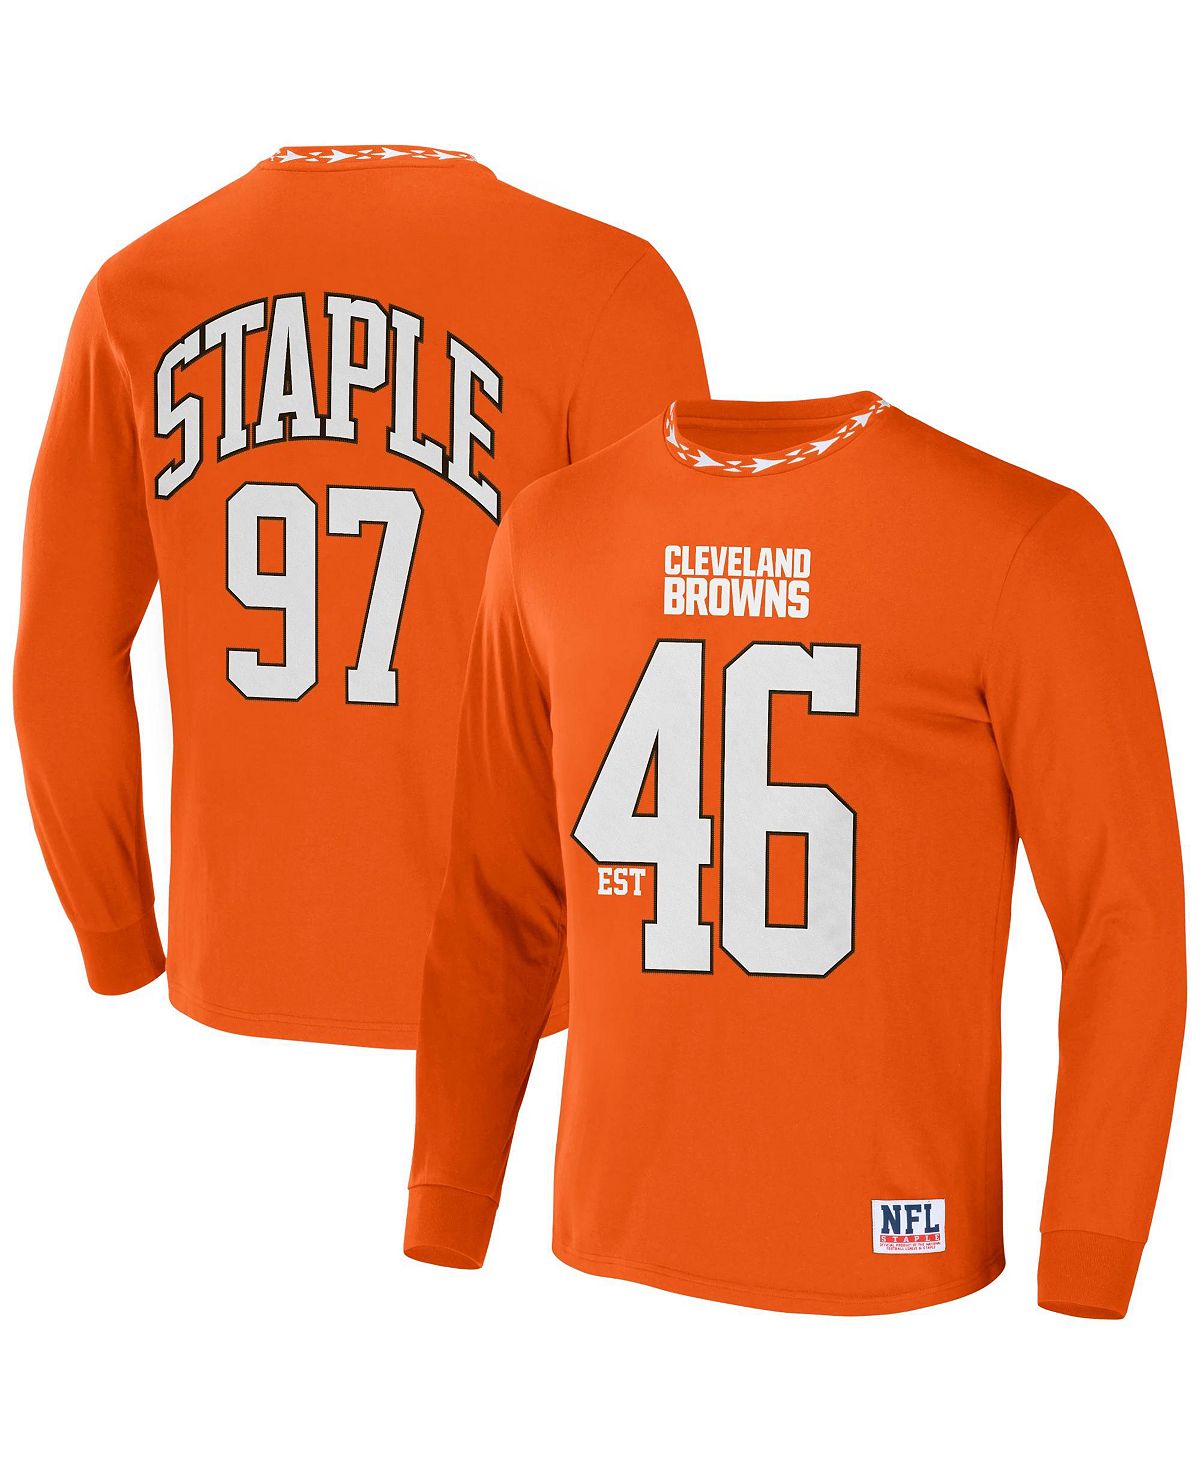 Мужская футболка nfl x staple orange cleveland browns core с длинным рукавом в стиле джерси NFL Properties